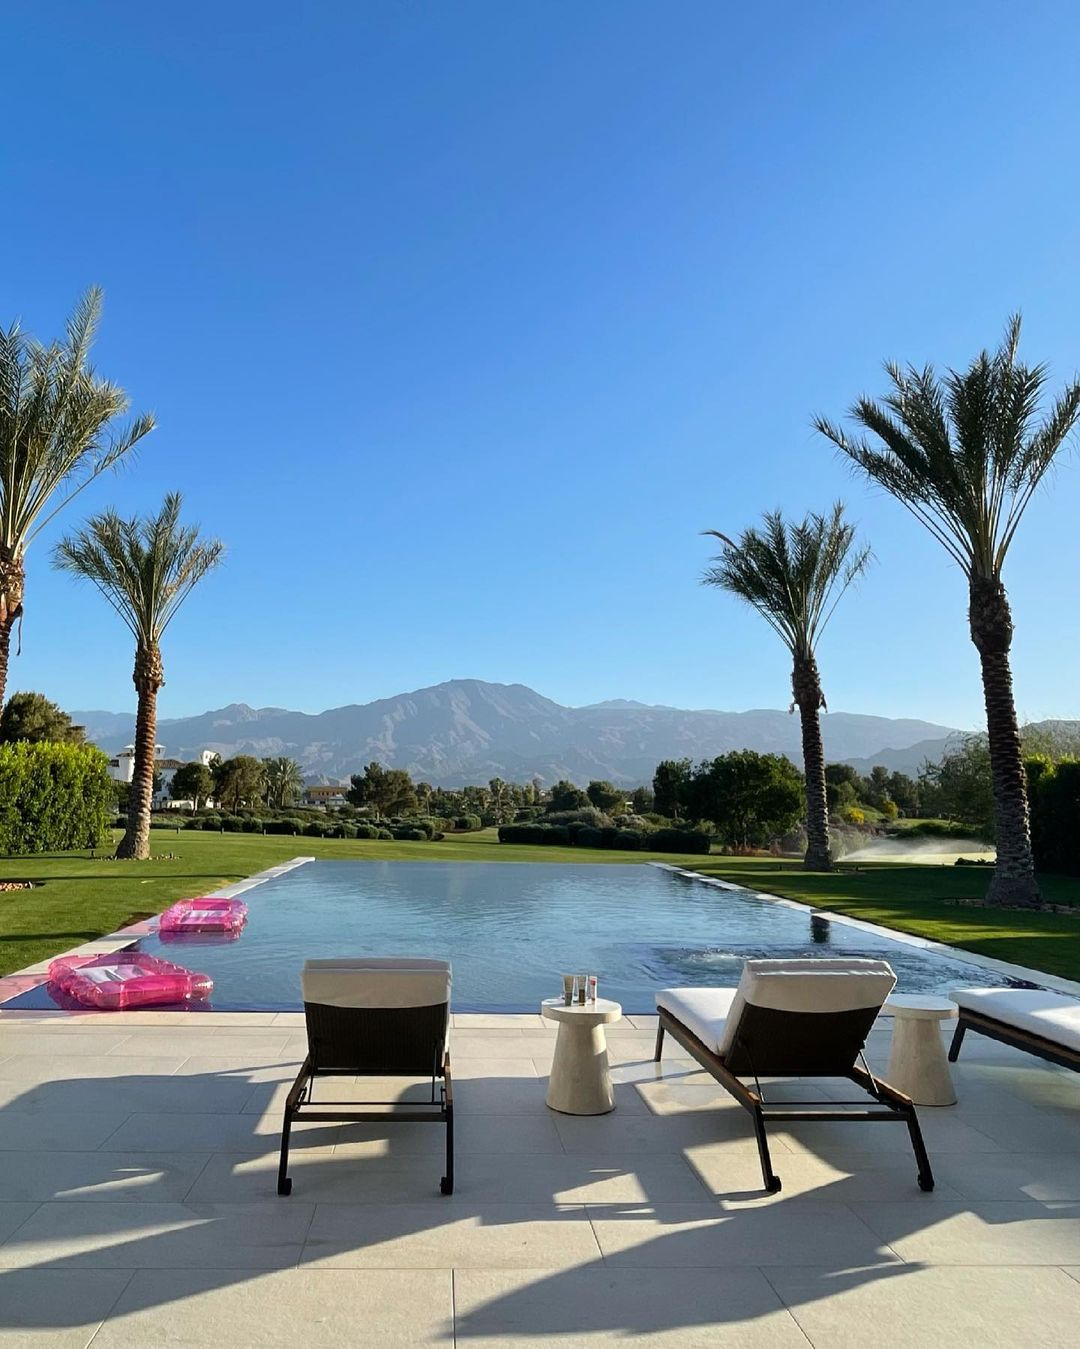 Kourtney bought the property, located near La Quinta, California, in 2021